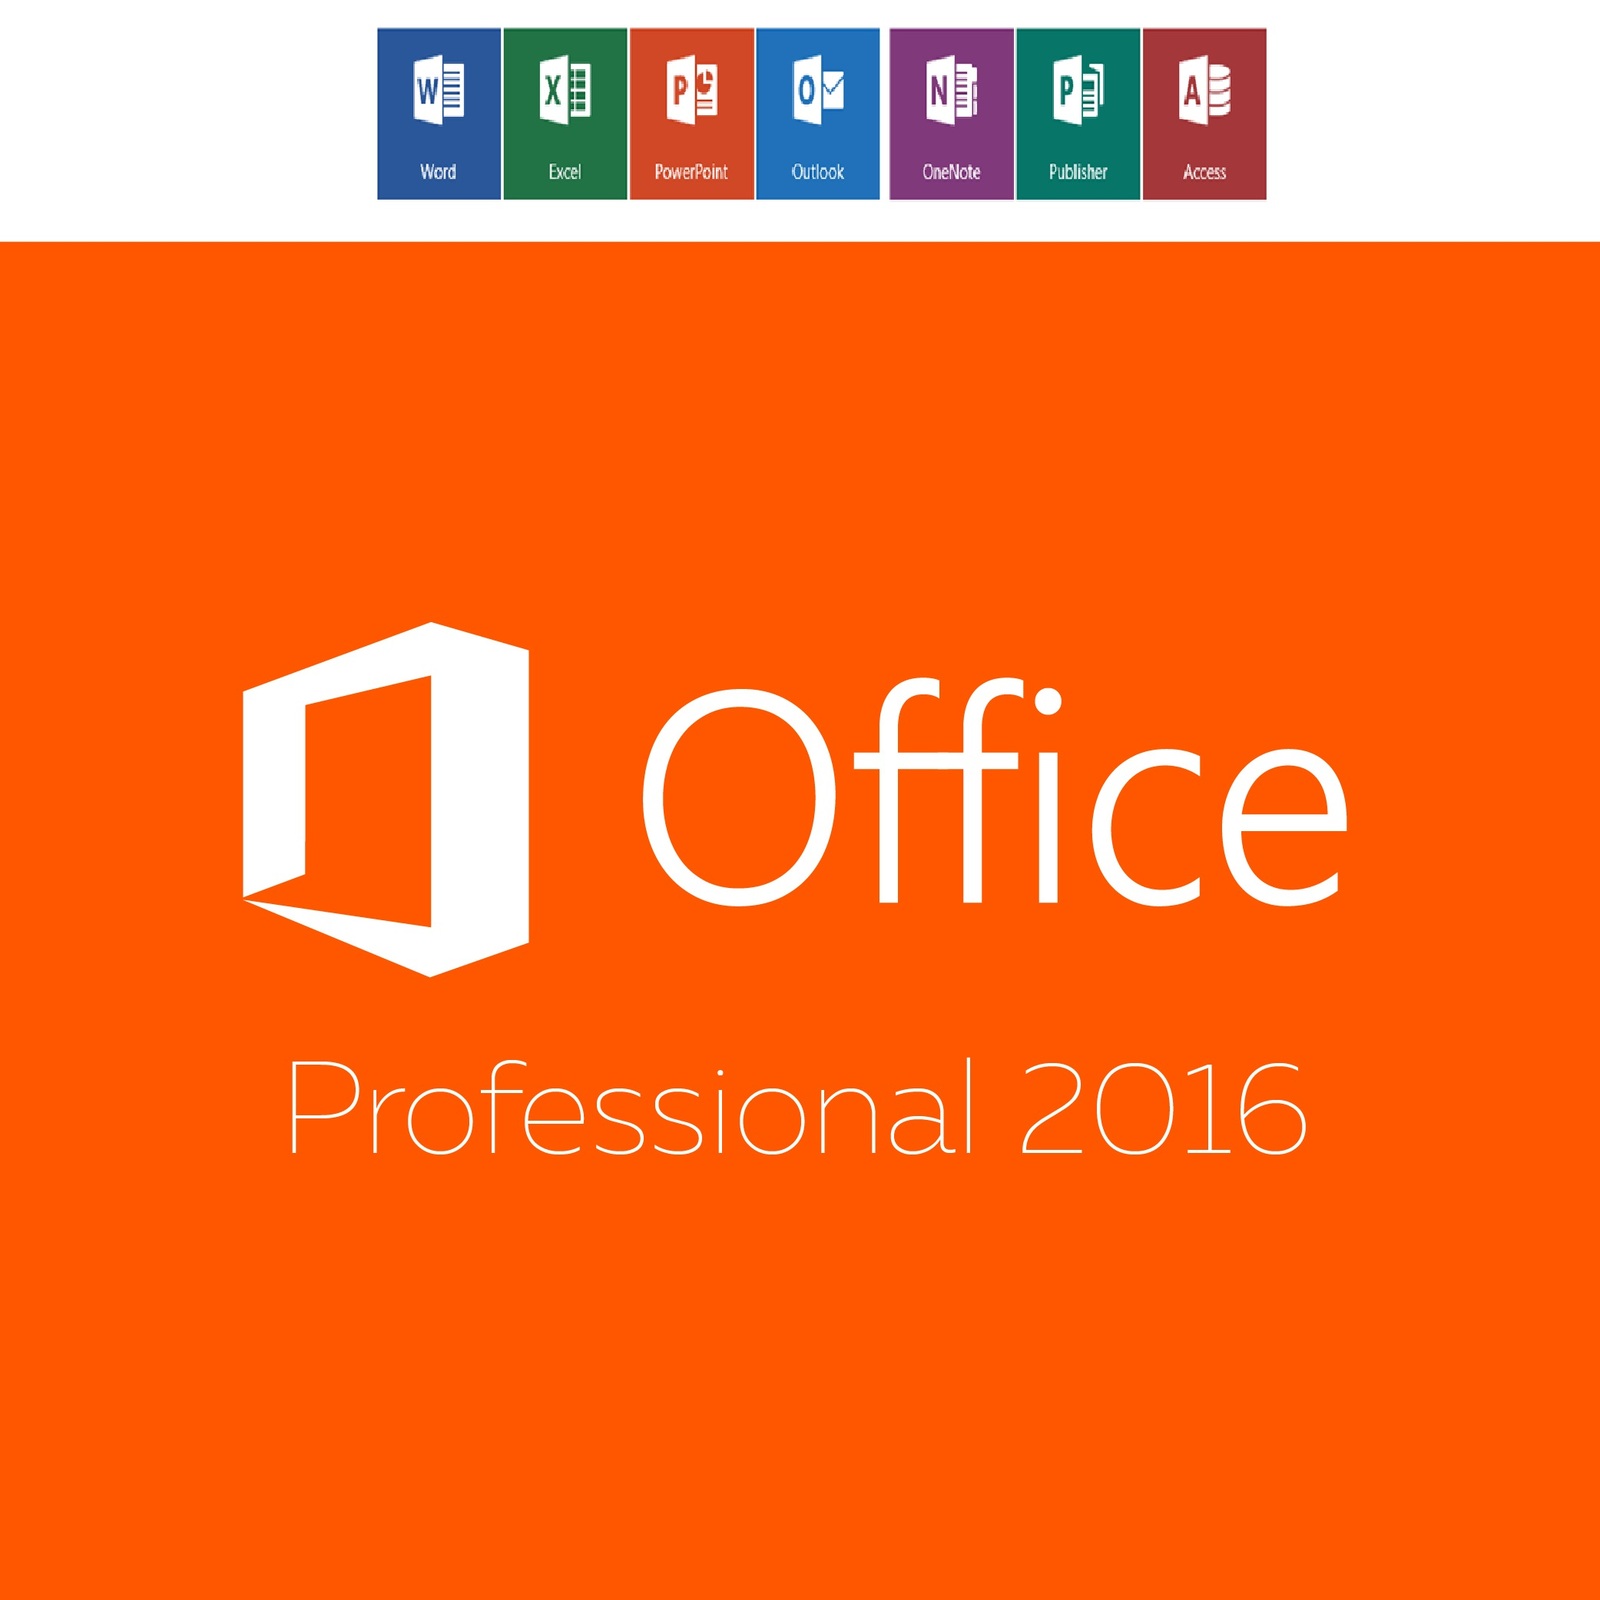 download office 2016 64 bit